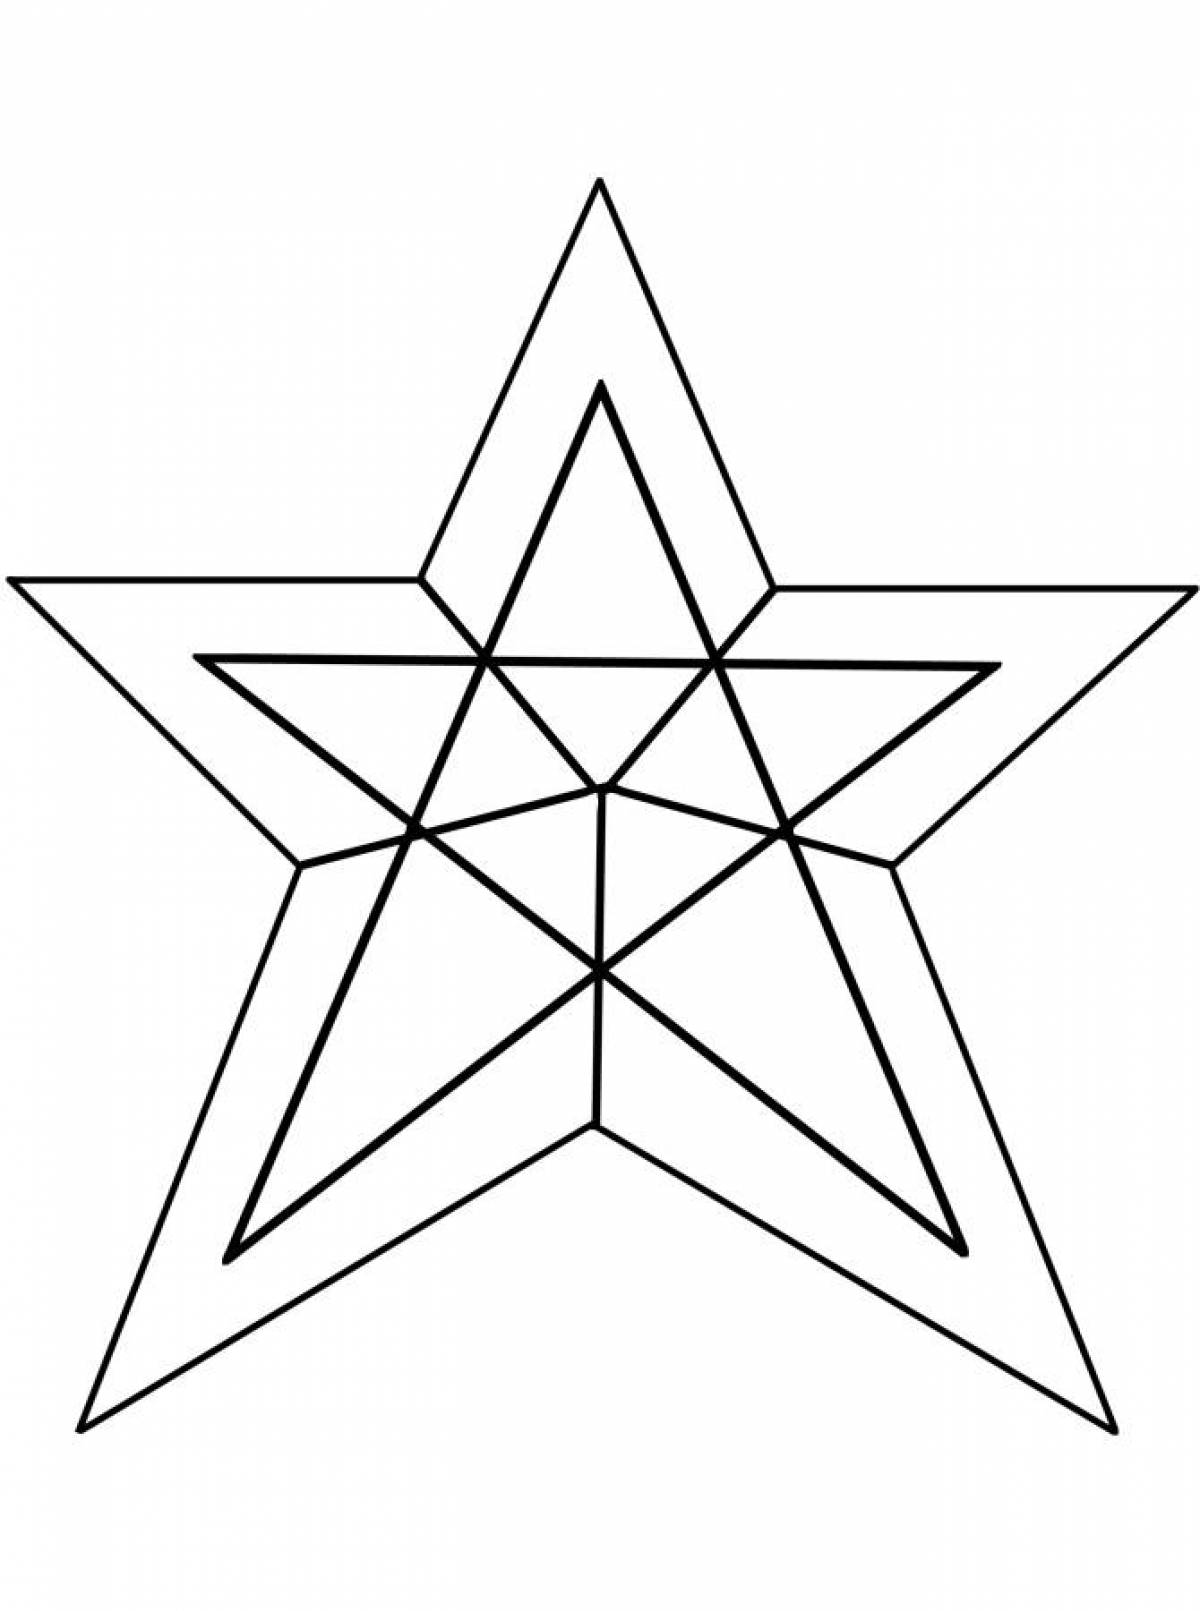 Star in a star